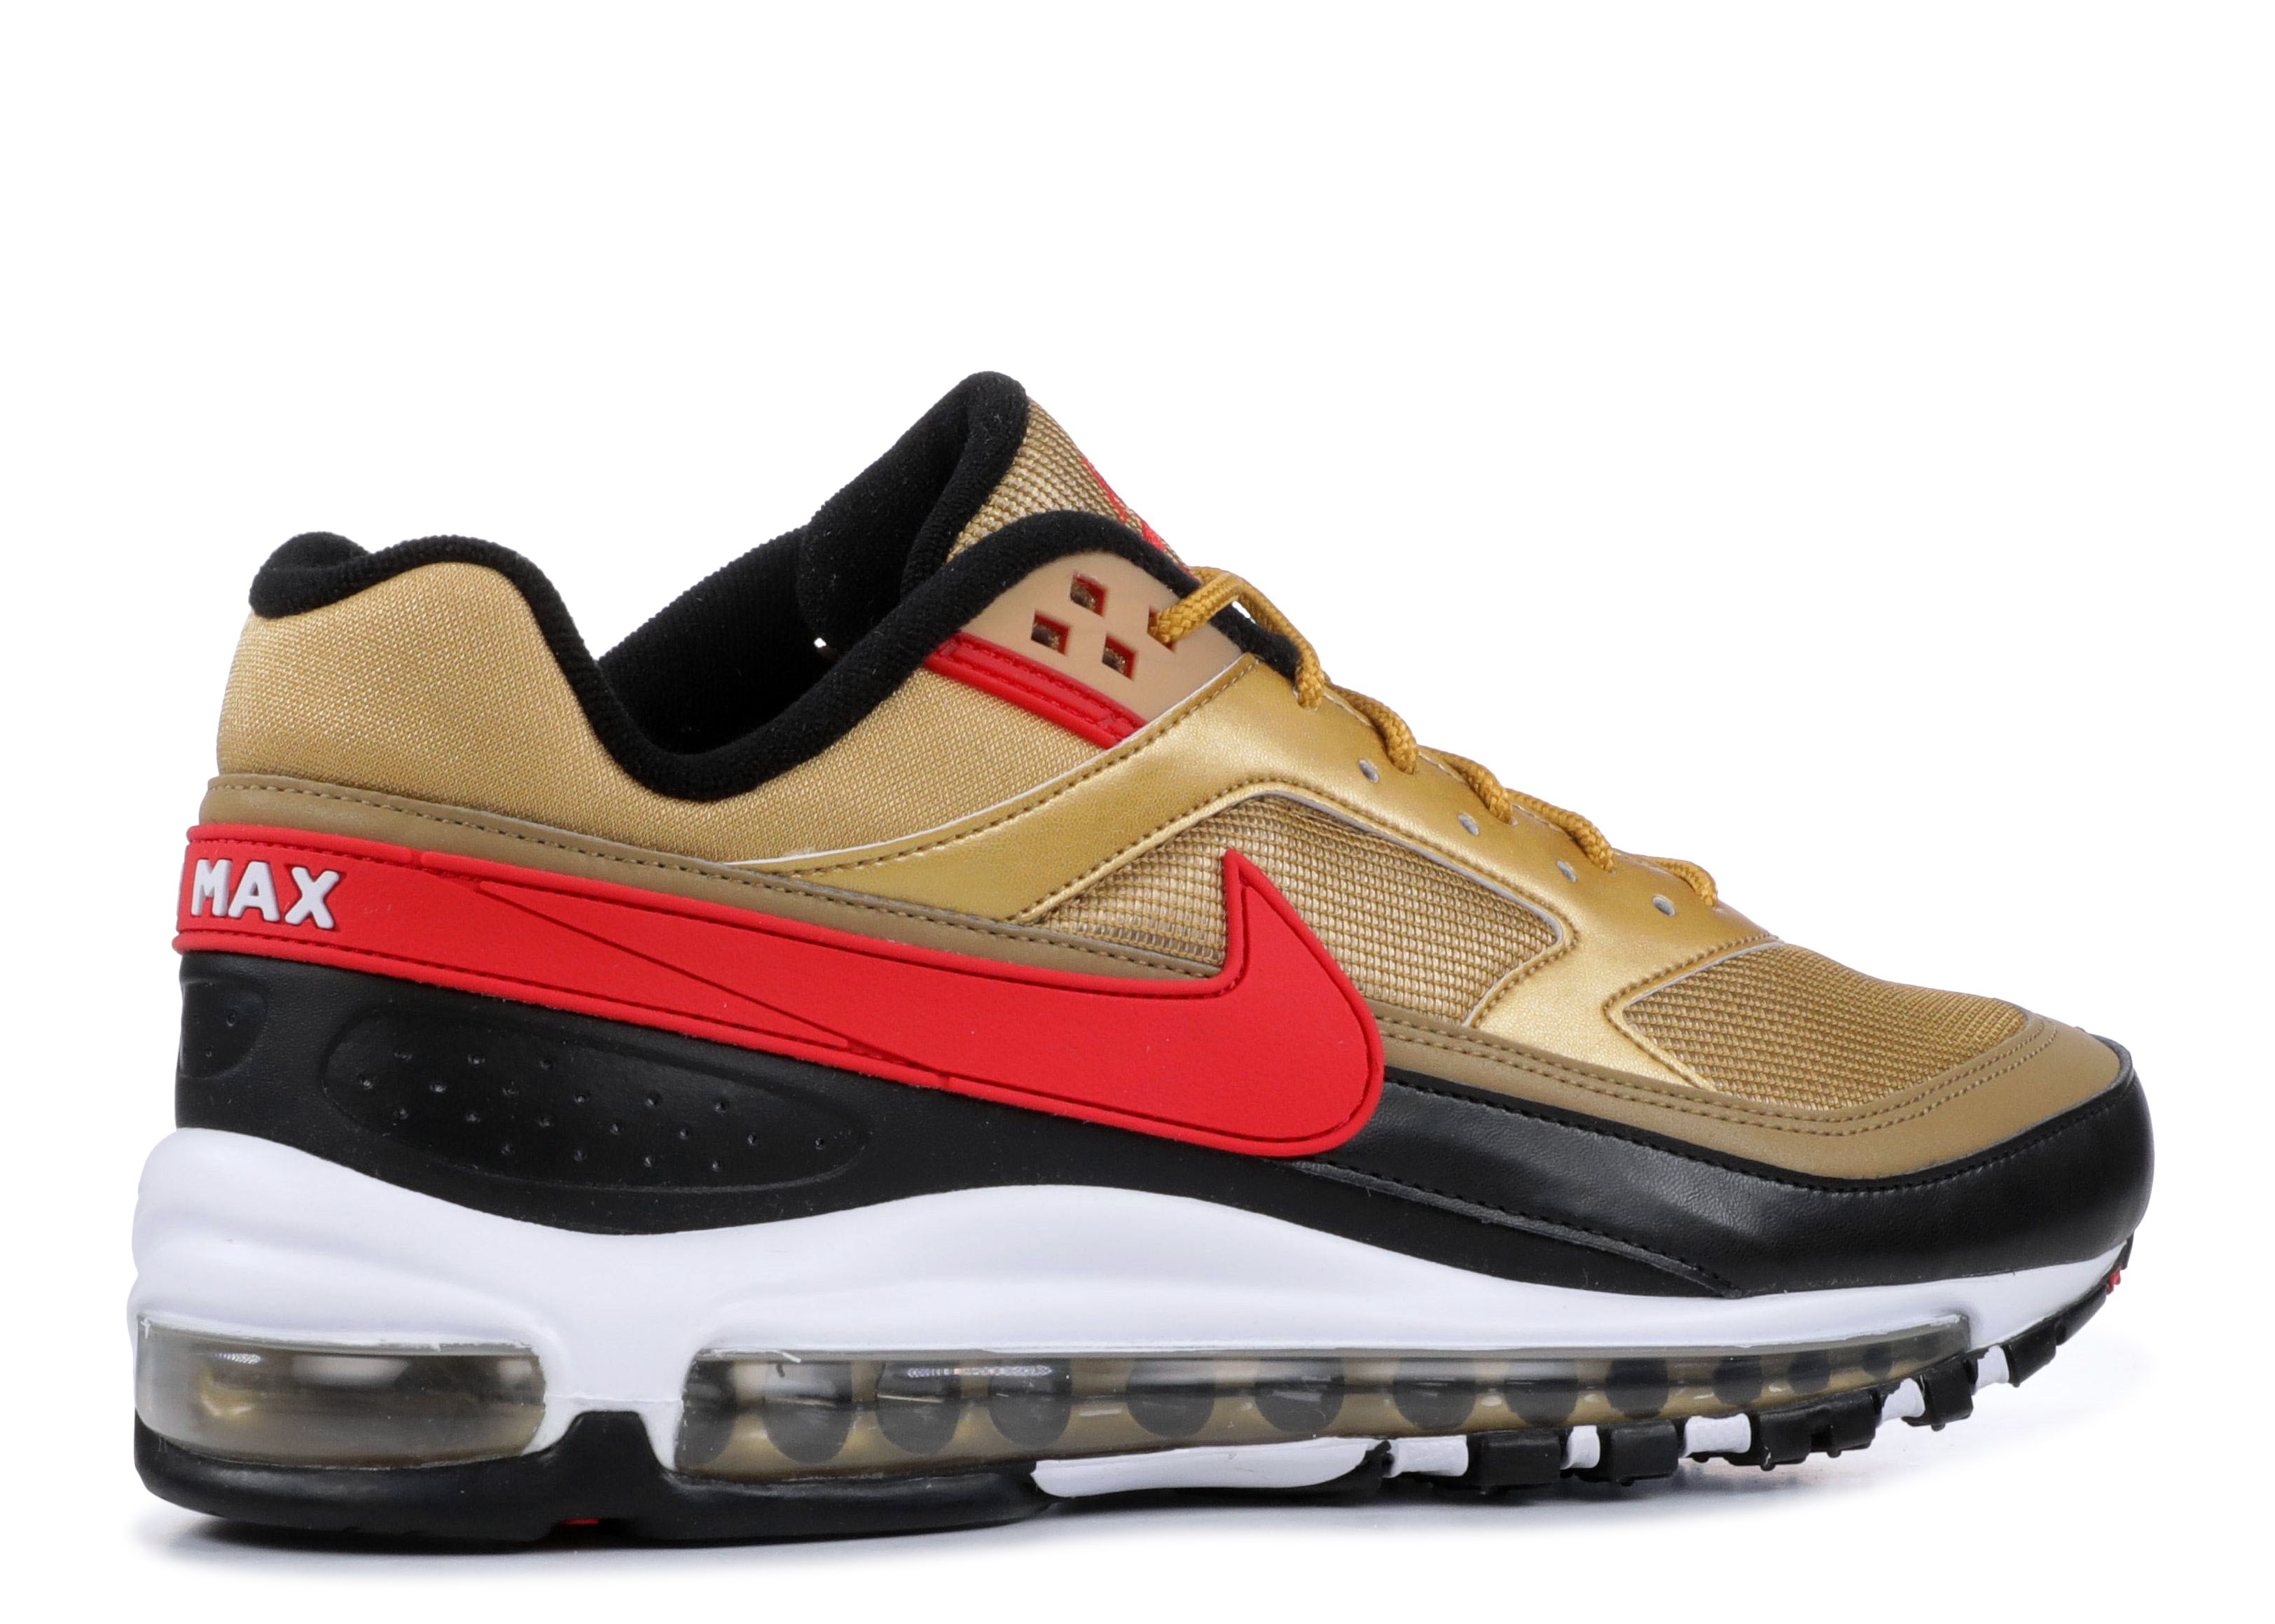 Men's shoes Nike Air Max 97 OG Metallic Gold/ Varsity Red-Black